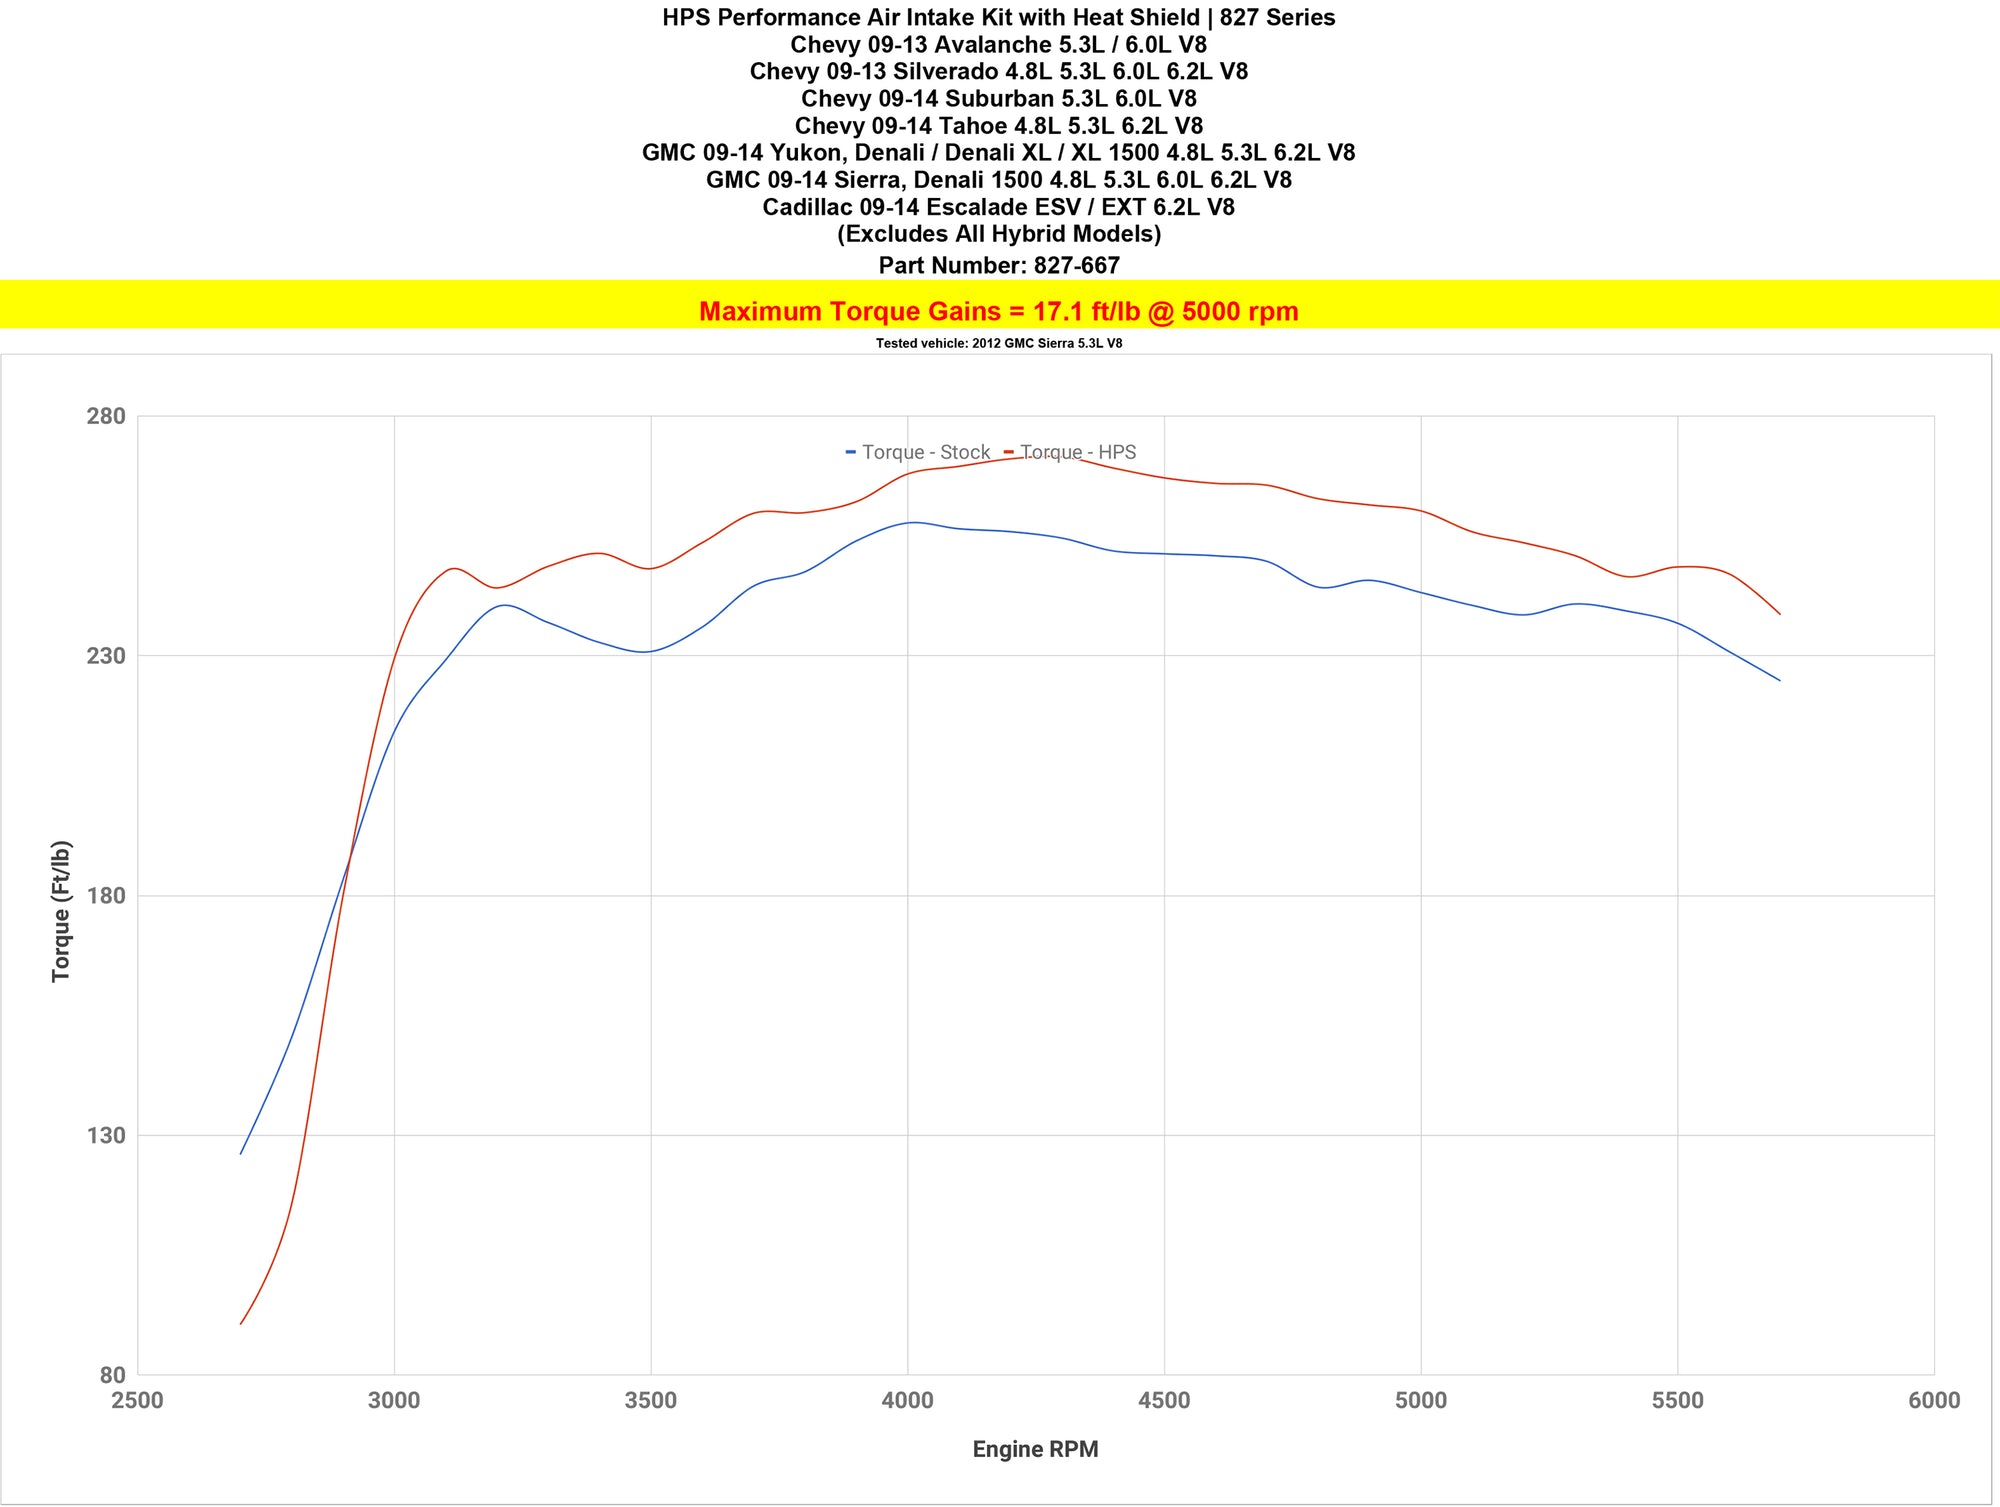 Dyno proven gains 17.1 ft/lb HPS Performance Shortram Air Intake Kit 2009-2014 GMC Sierra 1500 4.8L 5.3L 6.0L 6.2L V8 (Excludes Hybrid) 827-667P